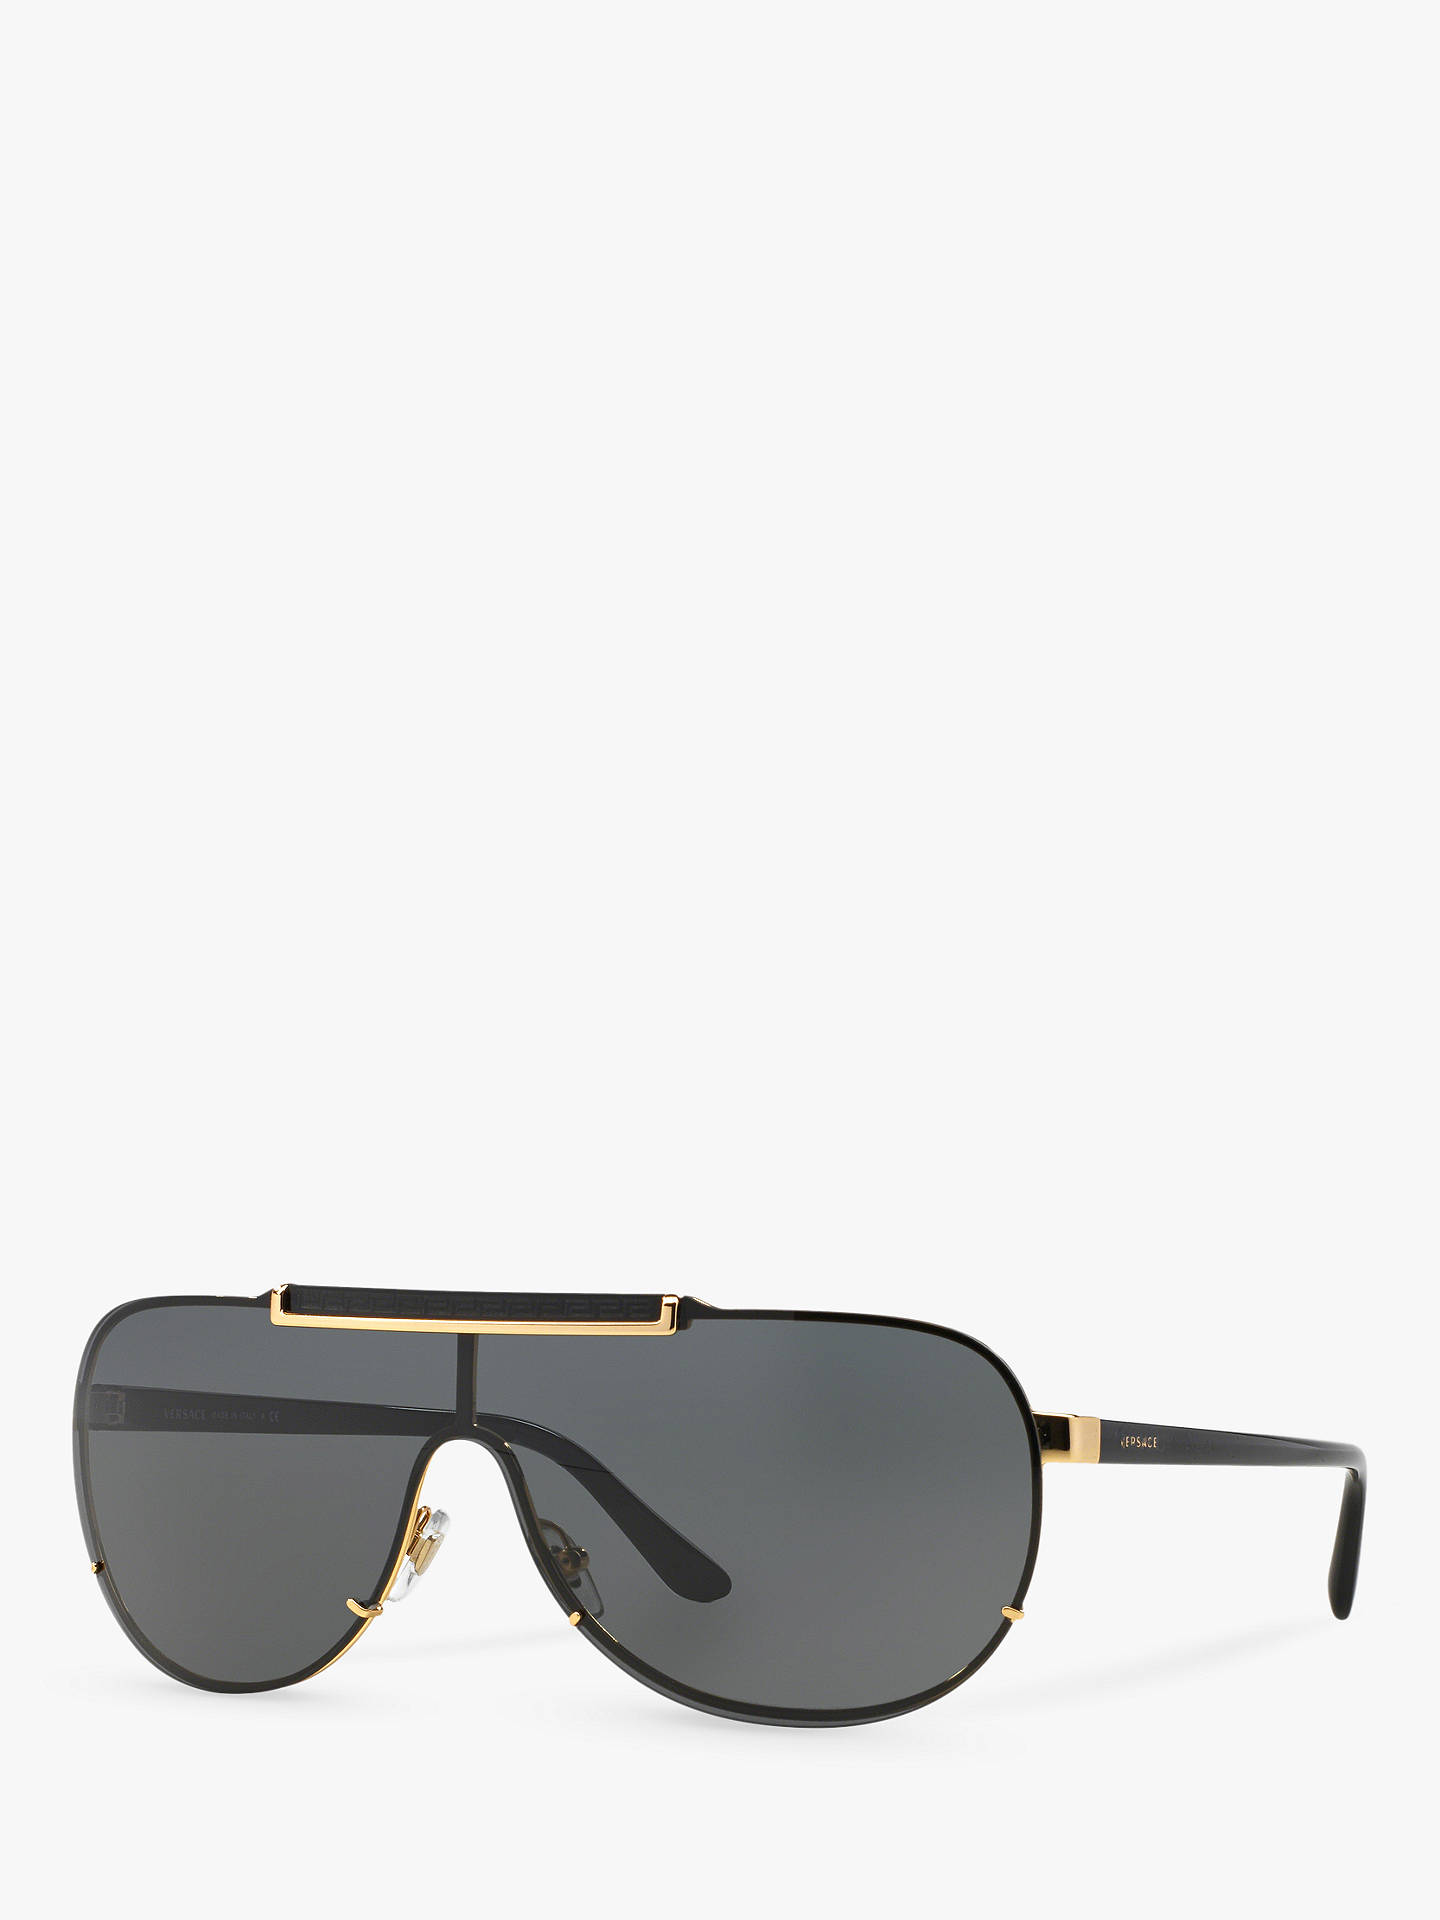 Versace VE2140 Men's Aviator Sunglasses, Gold/Grey at John Lewis & Partners